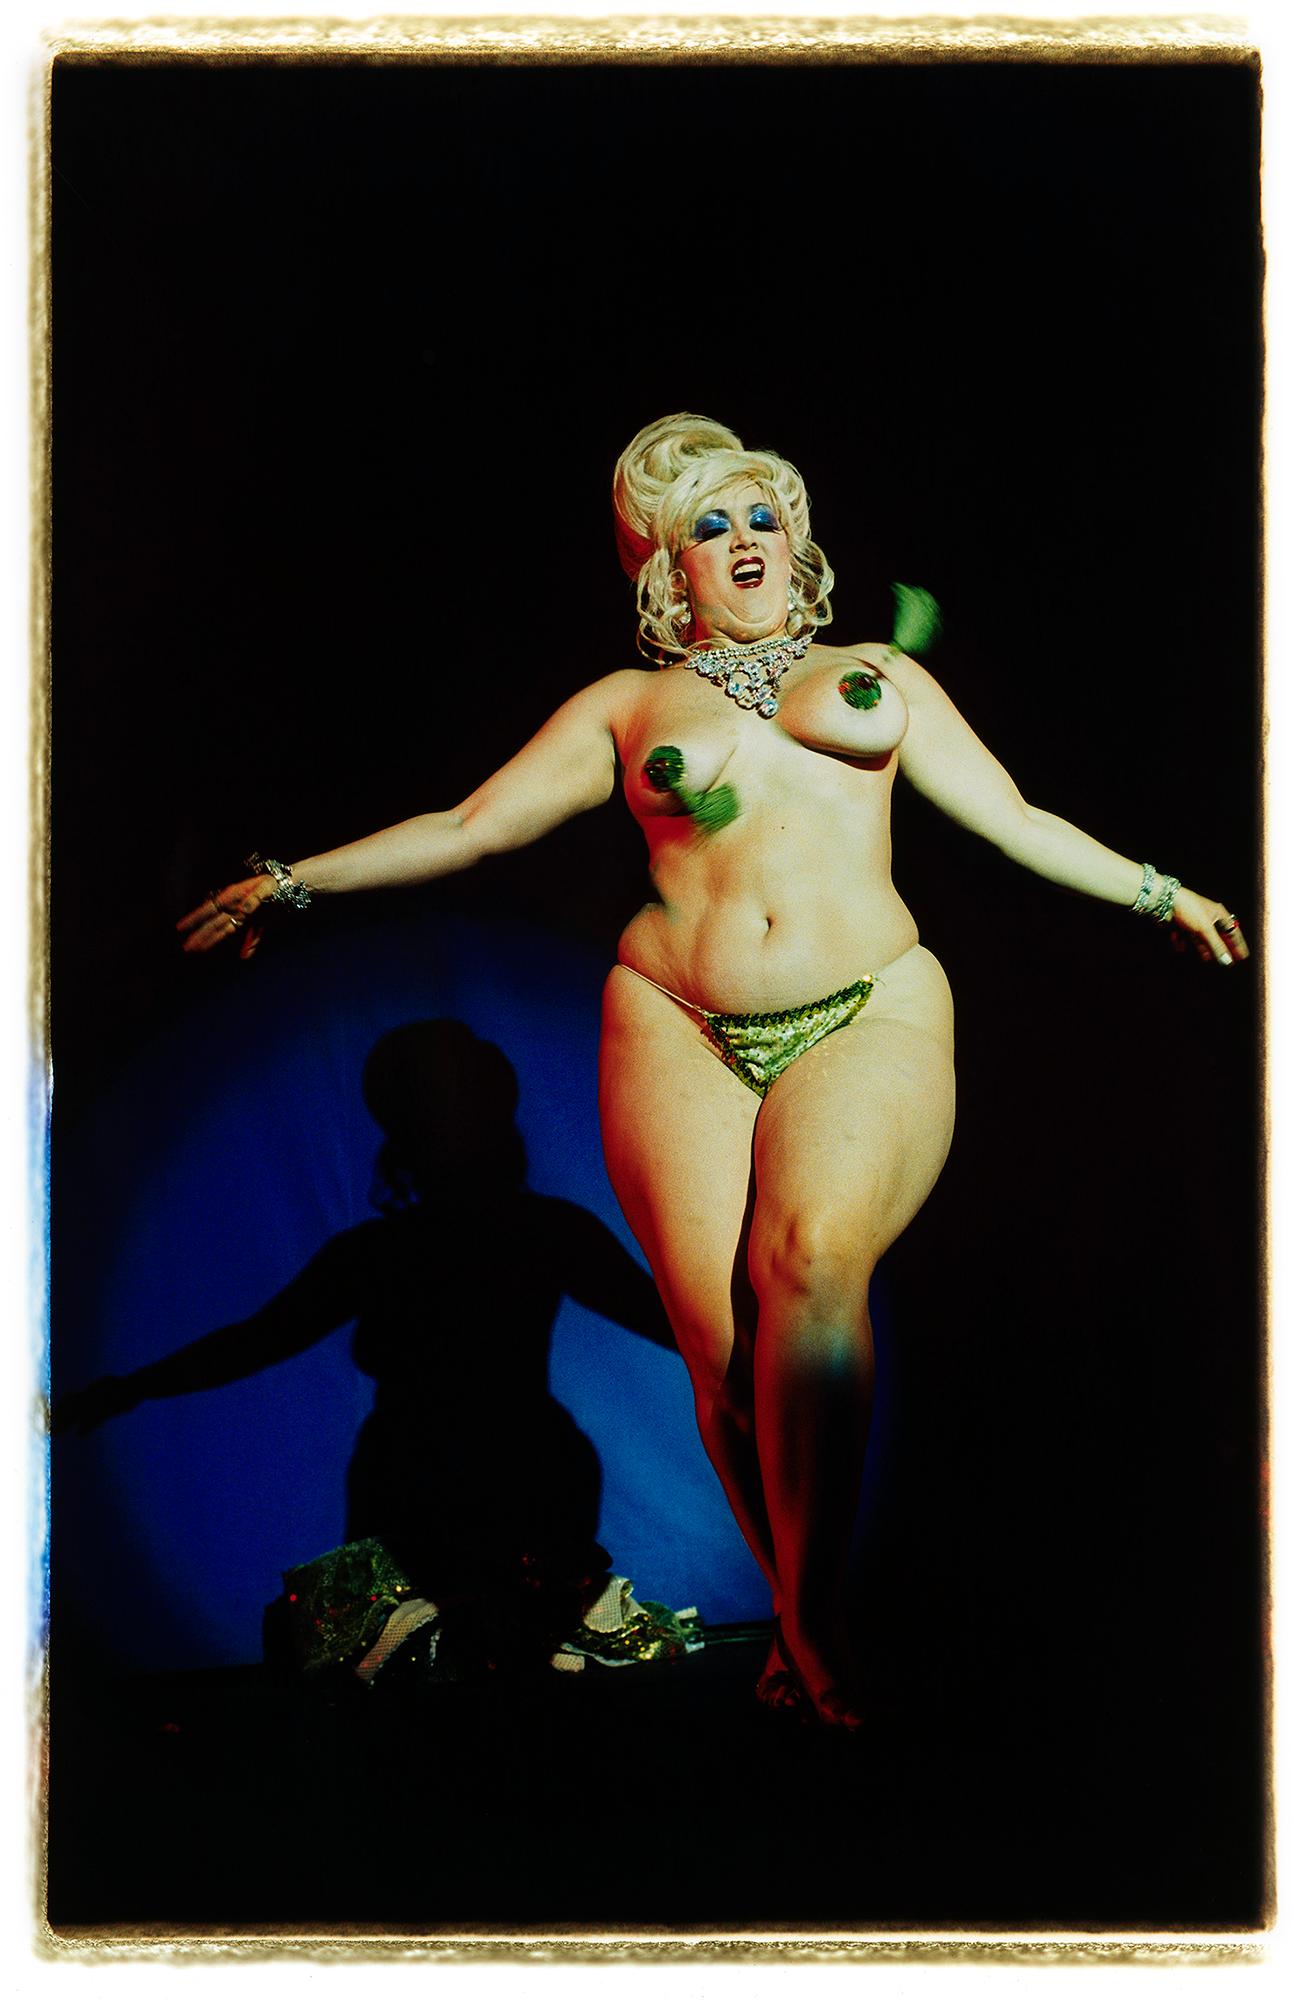 Richard Heeps Nude Photograph - Dirty Martini Fan Dance XXII, Tease-O-Rama, Hollywood - Burlesque Color Photo